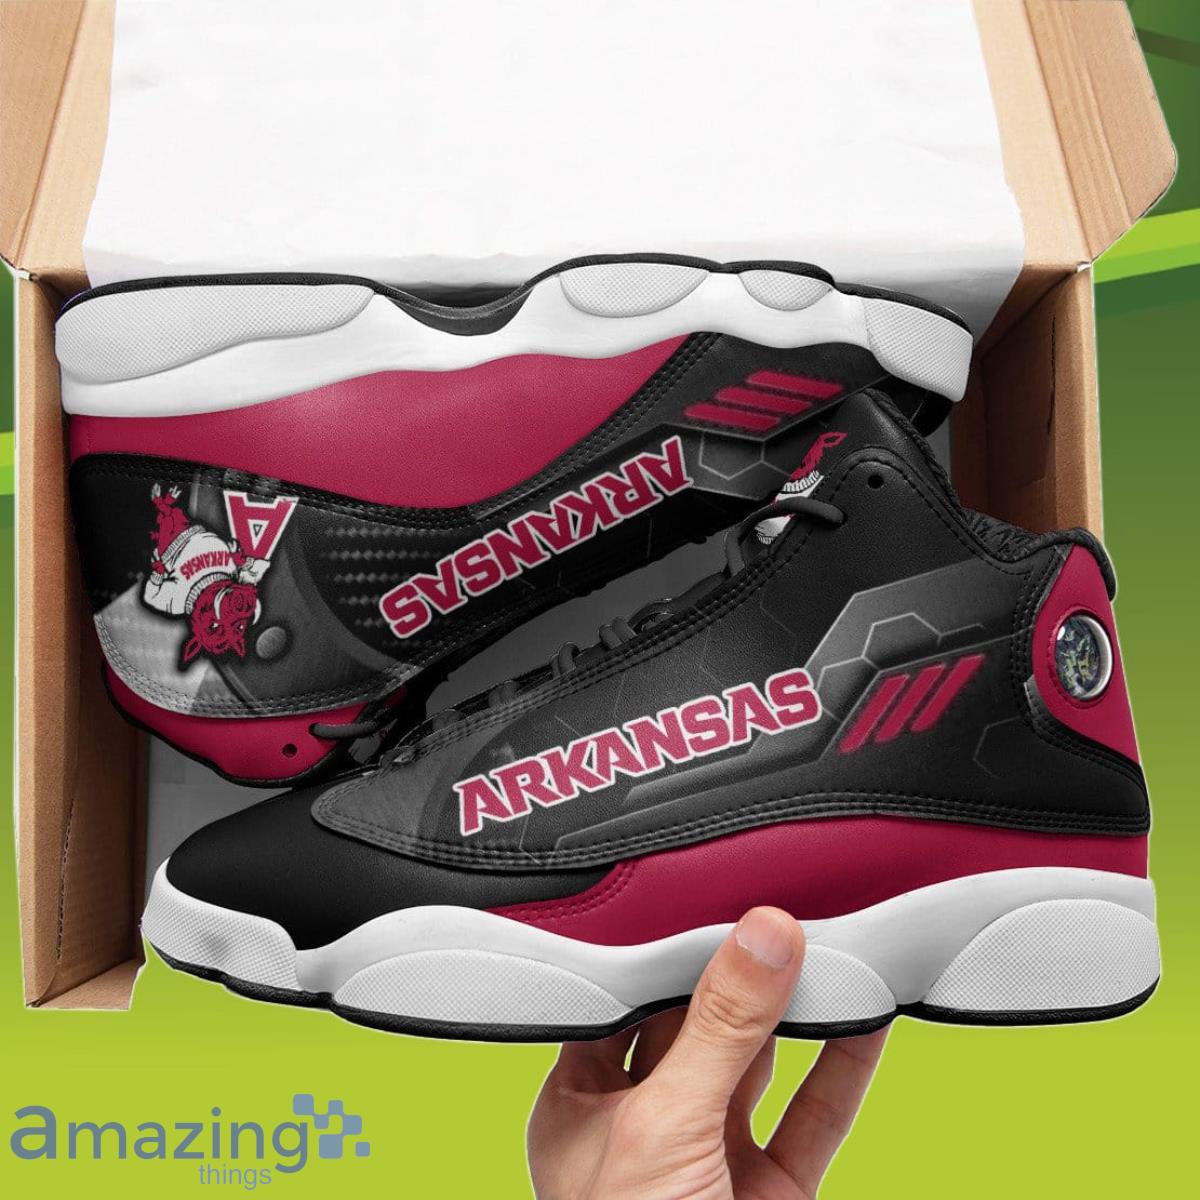 Arkansas Razorbacks Air Jordan 13 Sneakers Best Gift For Men And Women Product Photo 2